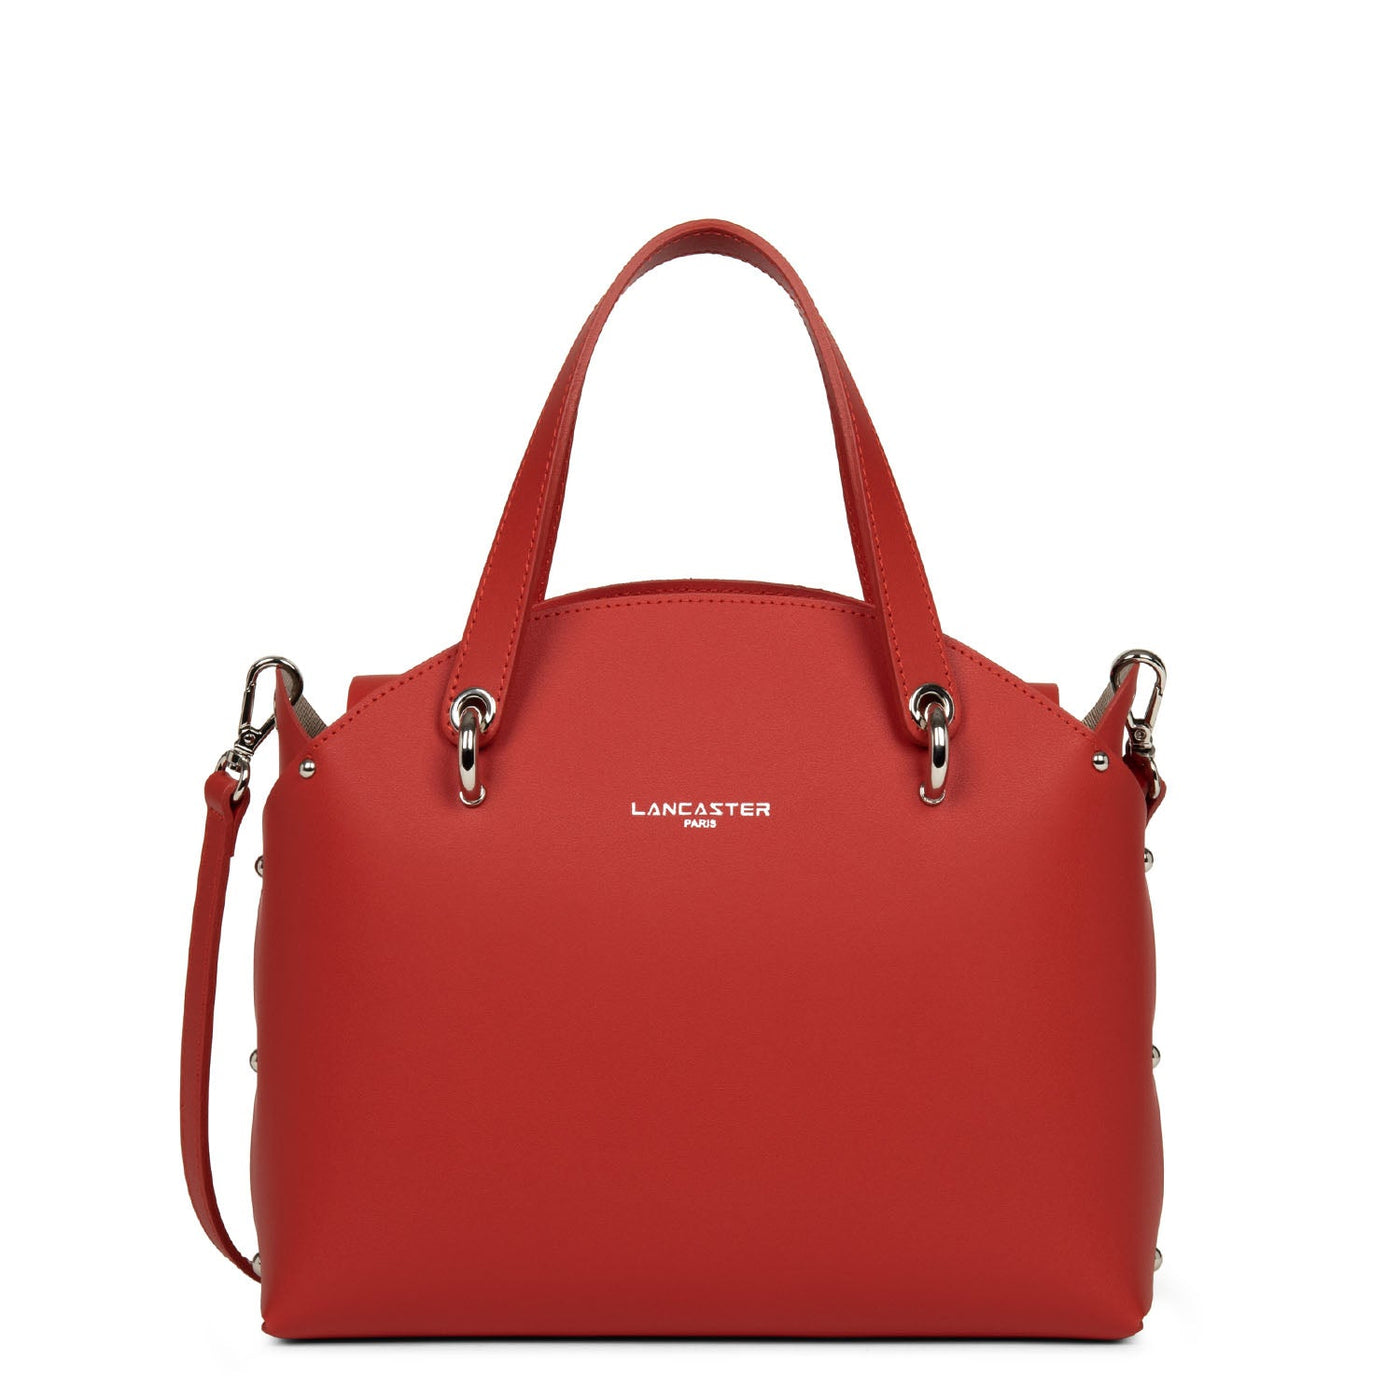 handbag - city flore #couleur_rouge-in-champagne